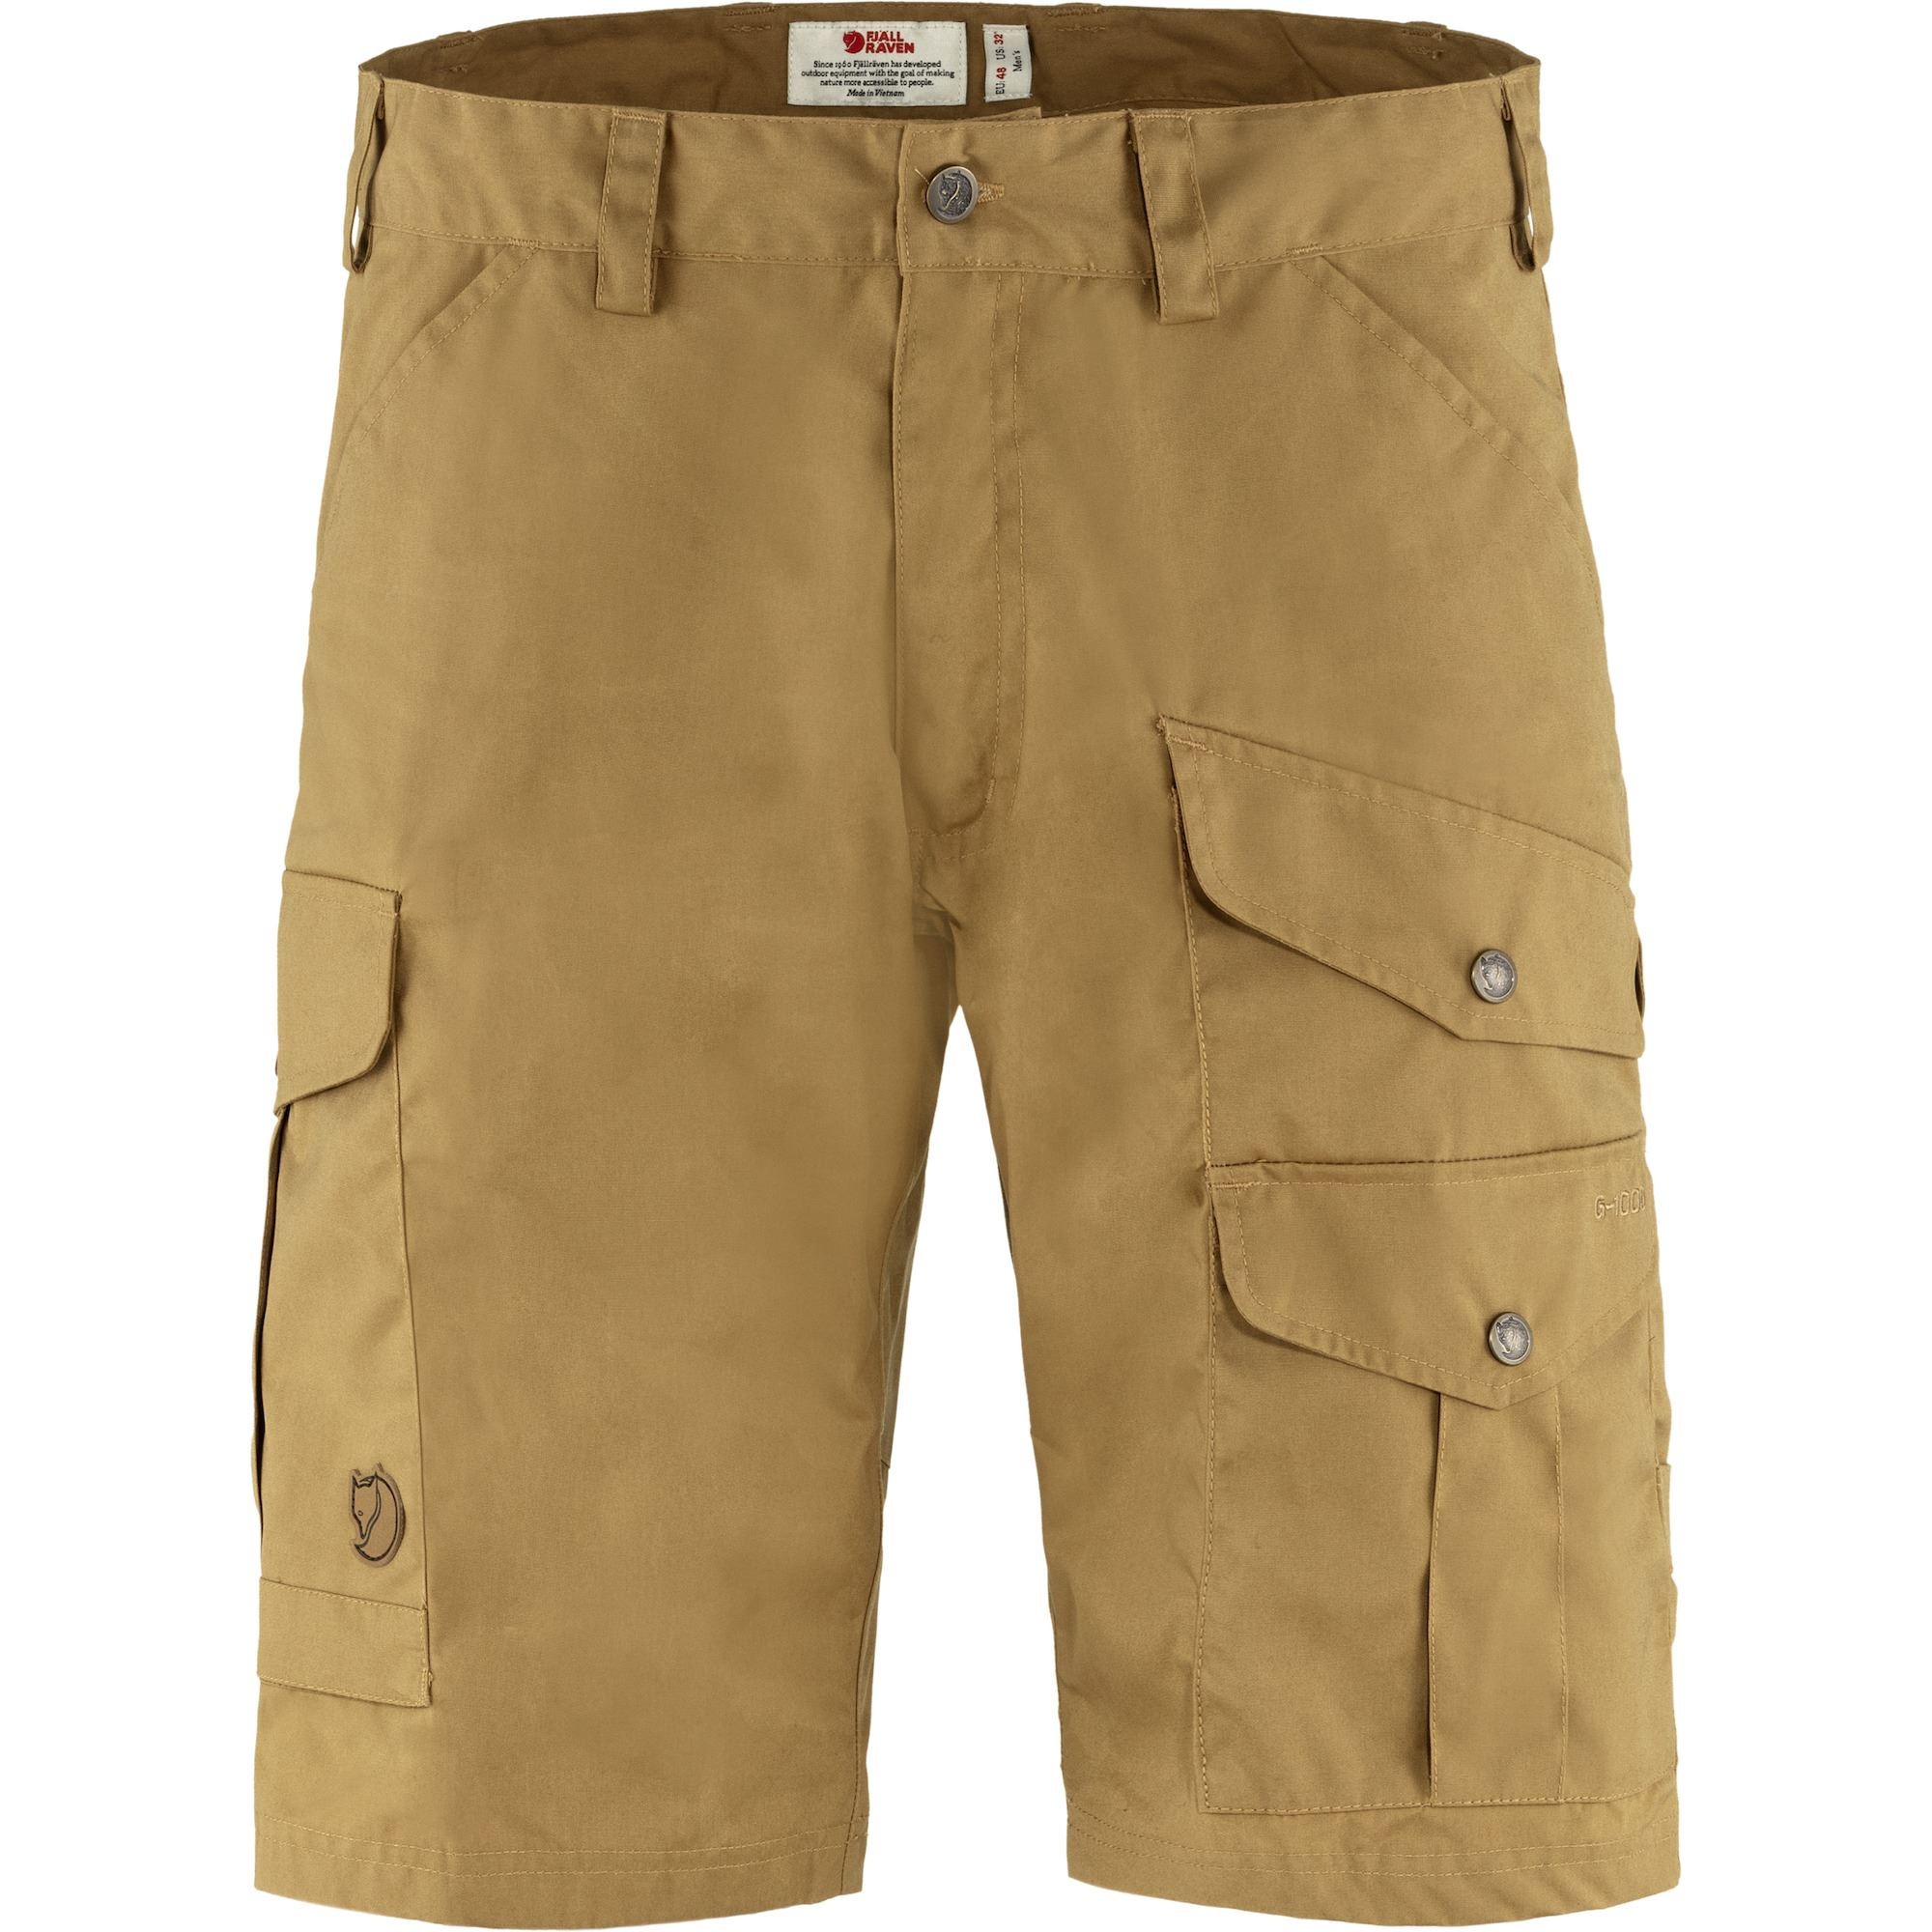 Barents Pro Shorts, buckwheat brown